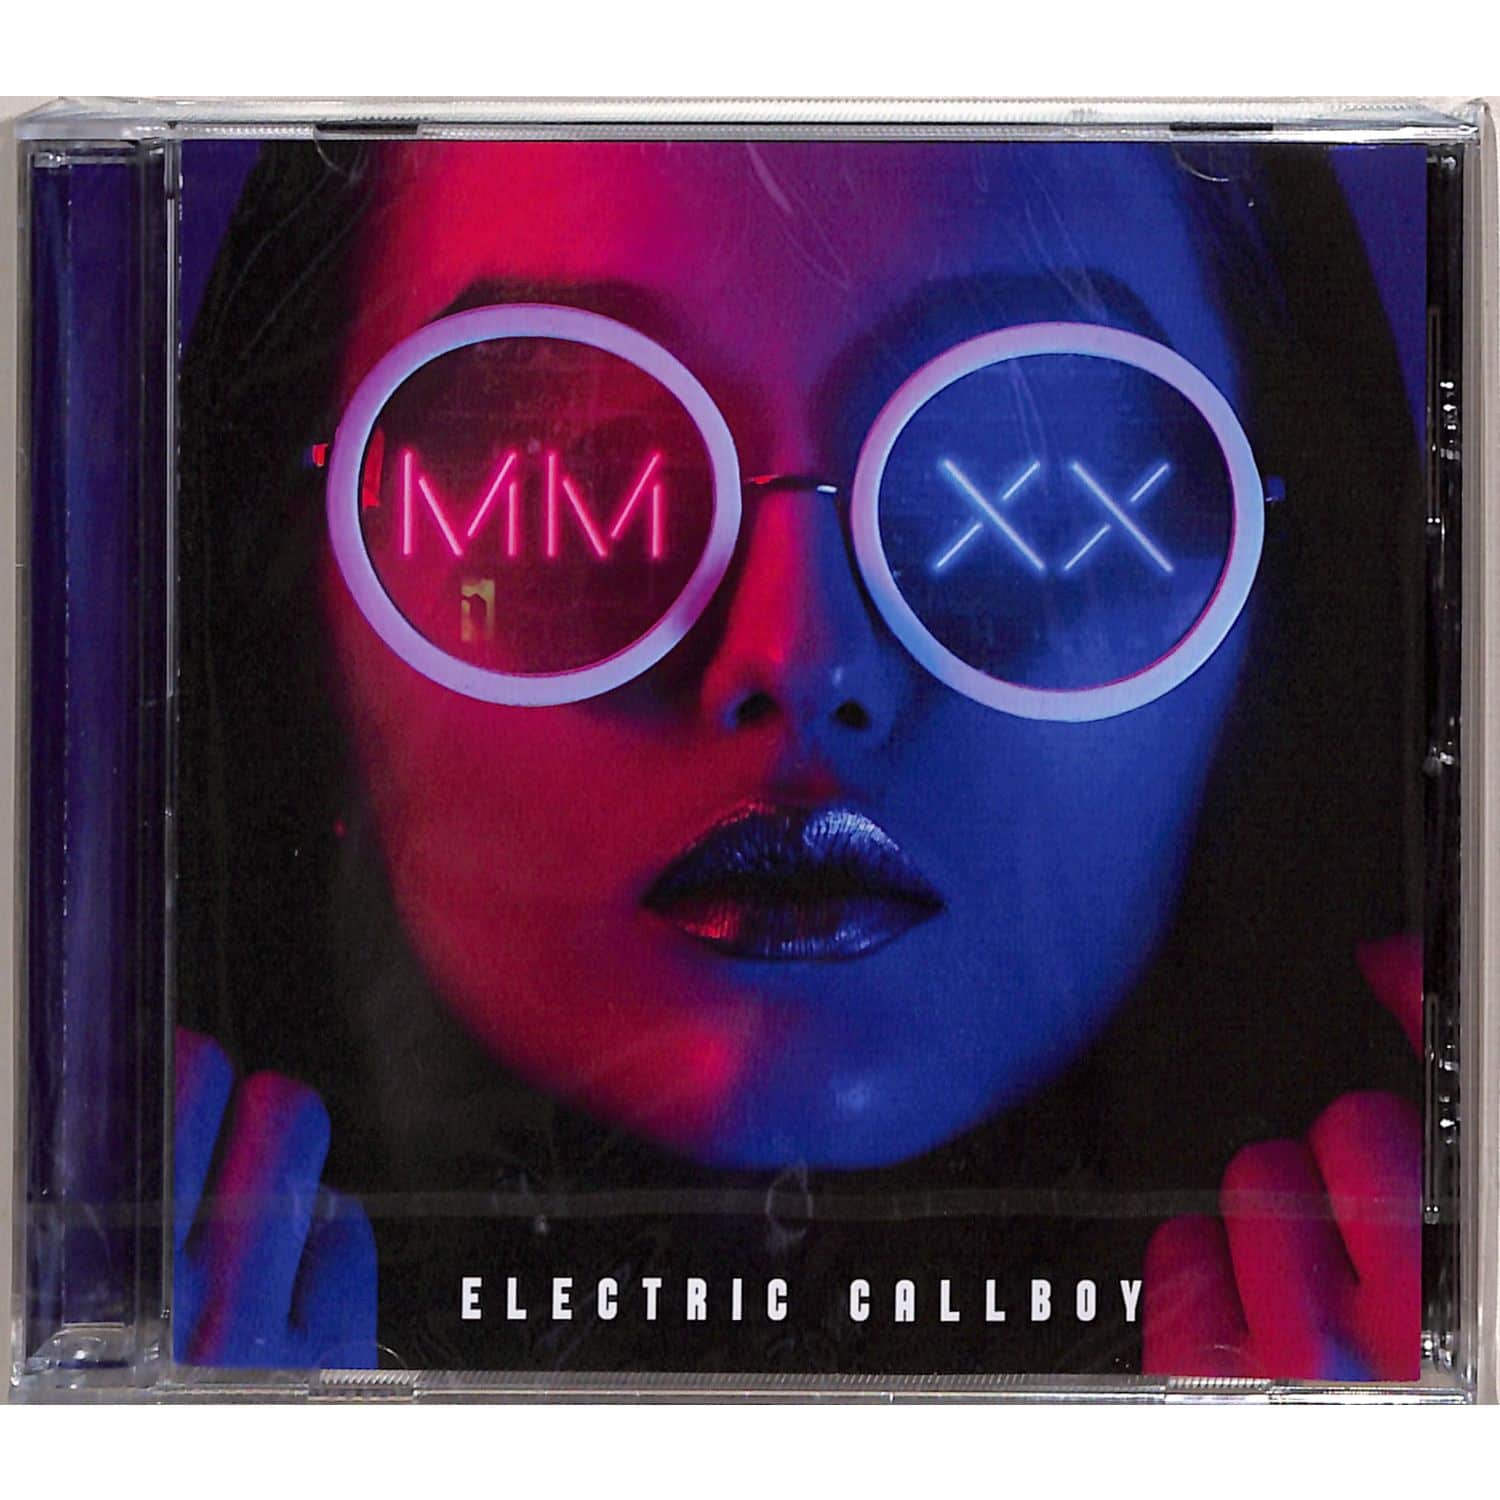 Electric Callboy - MMXX - EP Maxi Single CD